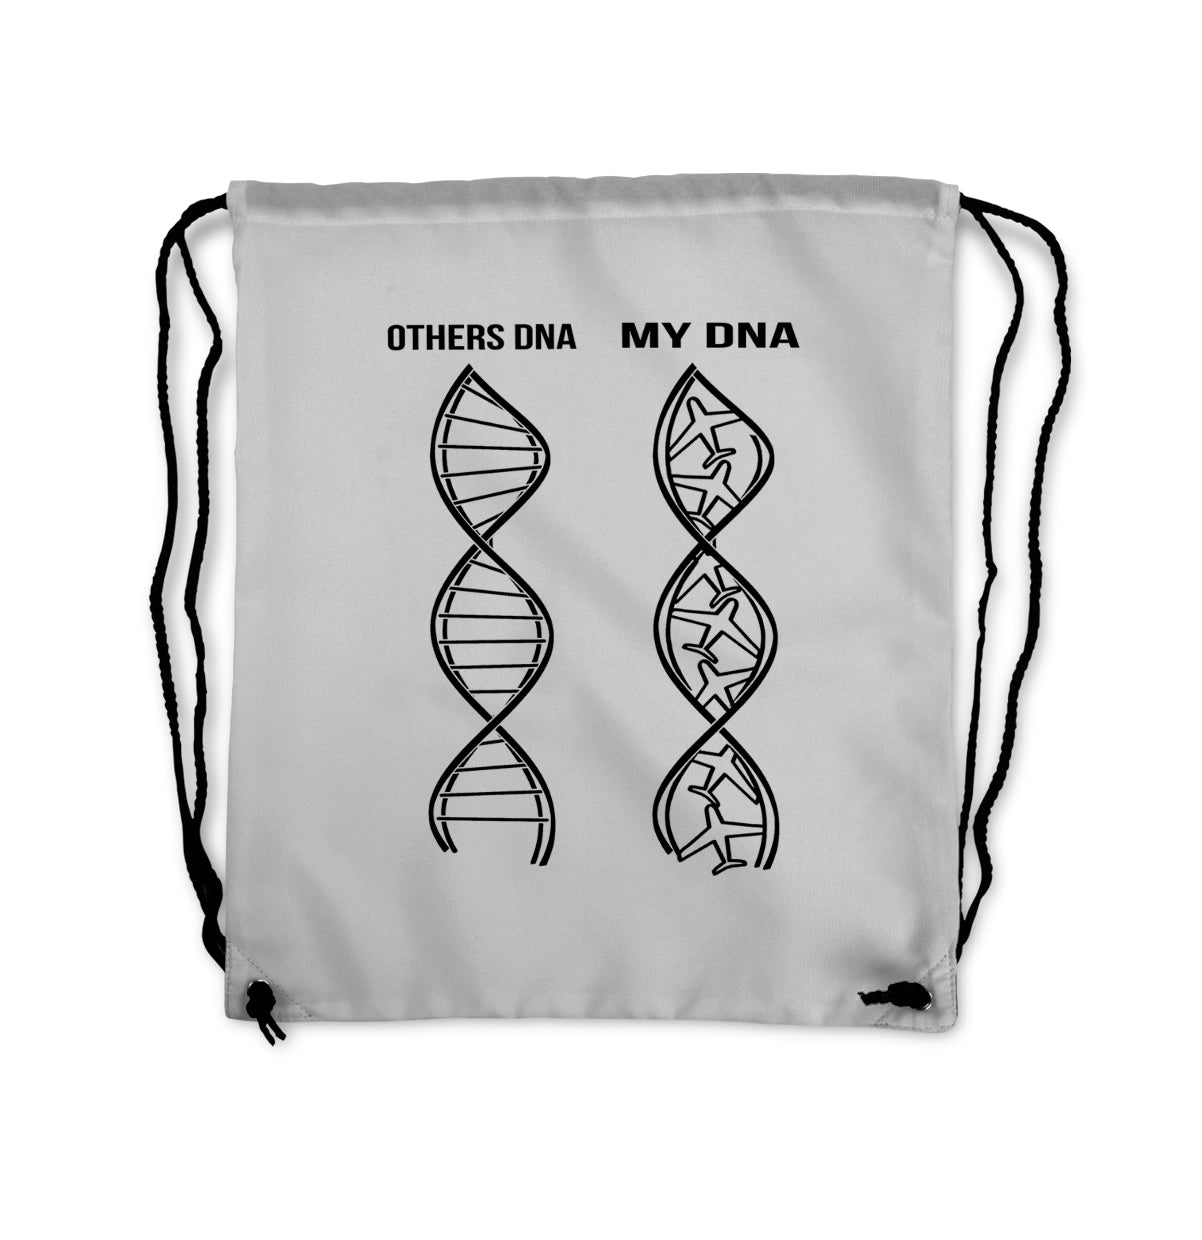 Aviation DNA Designed Drawstring Bags